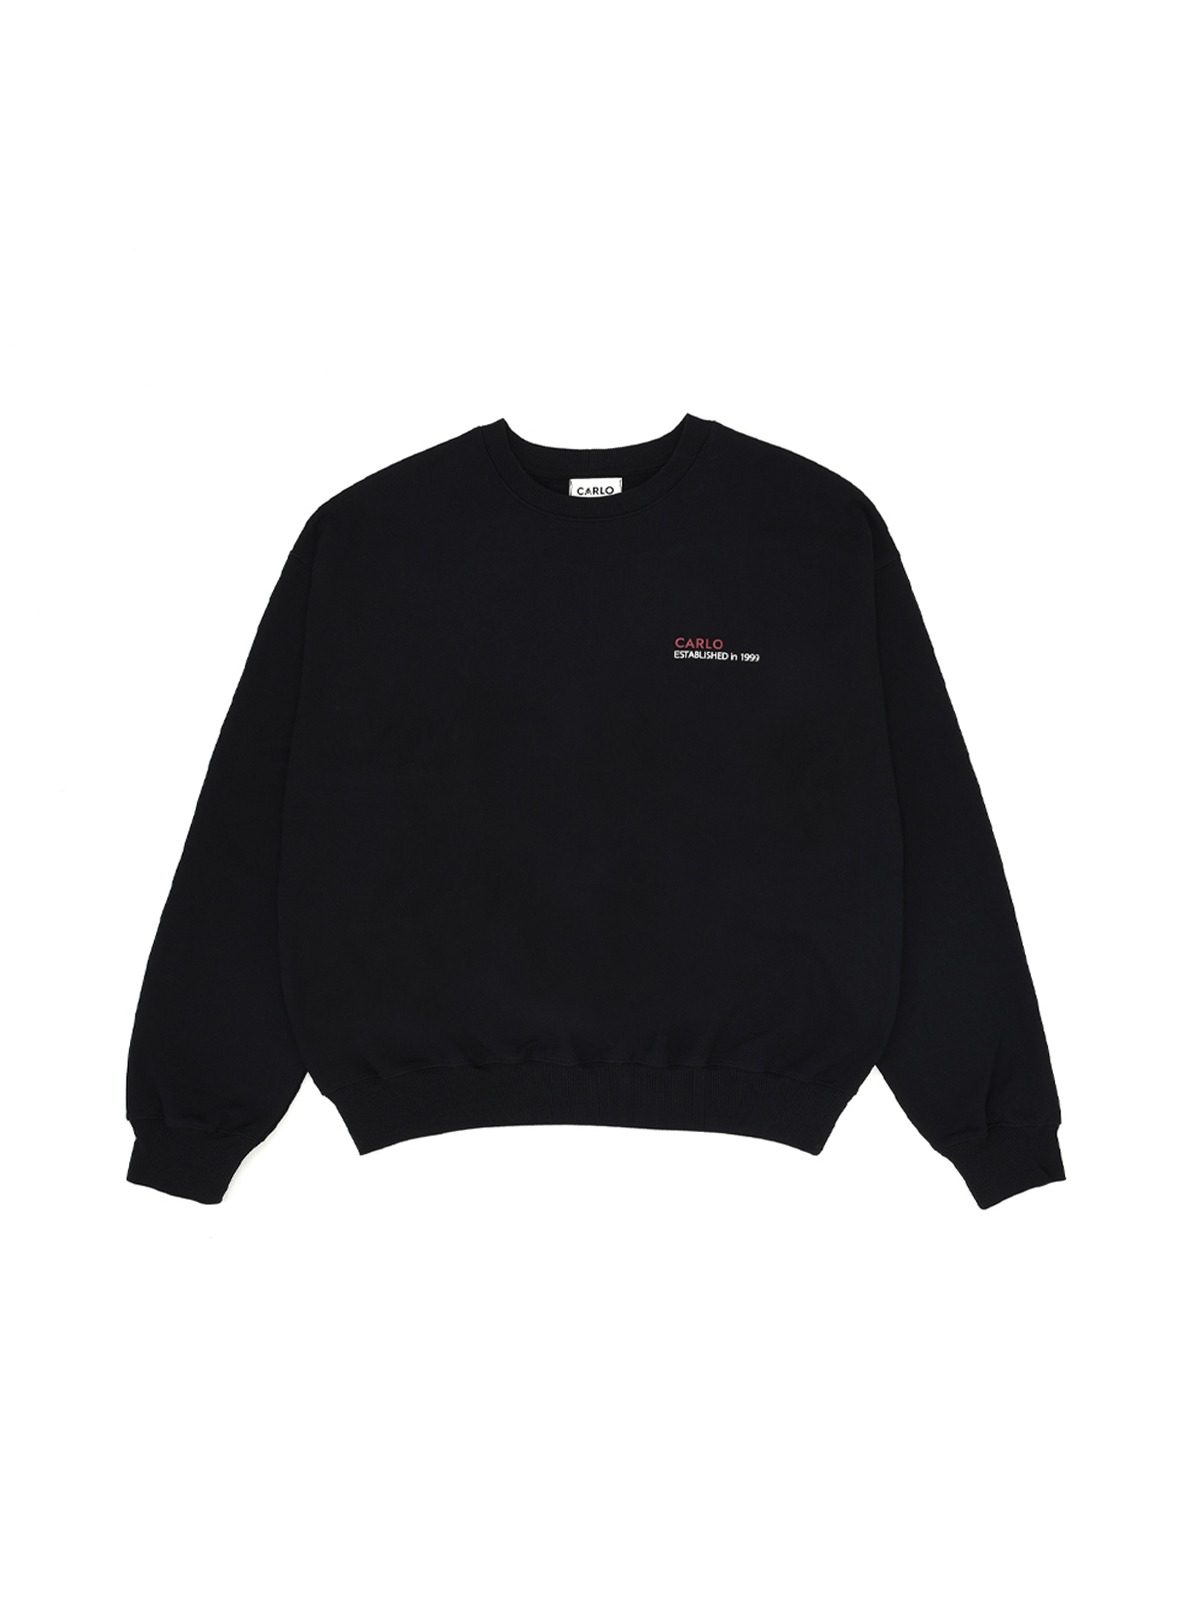 ESTABLISHED in 1999 Sweatshirts Black